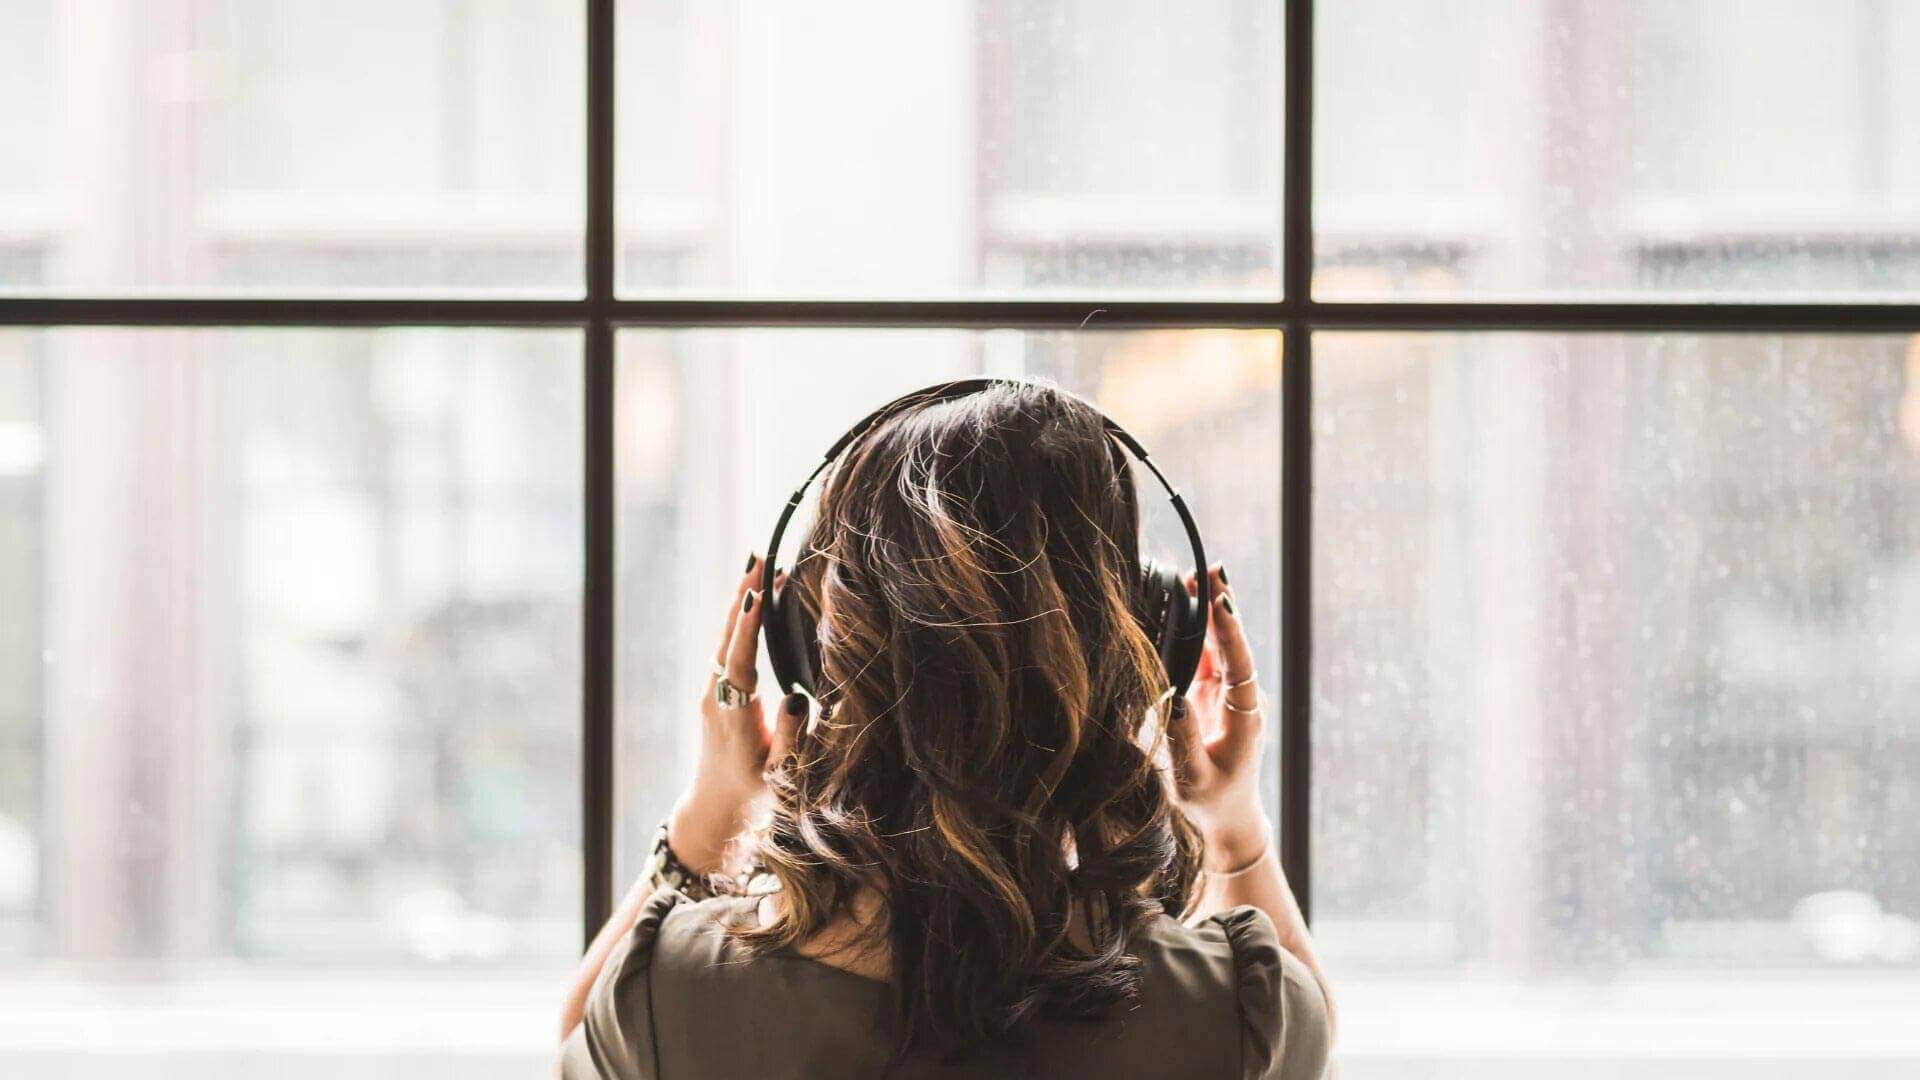 A woman wearing headphones, enjoying music.